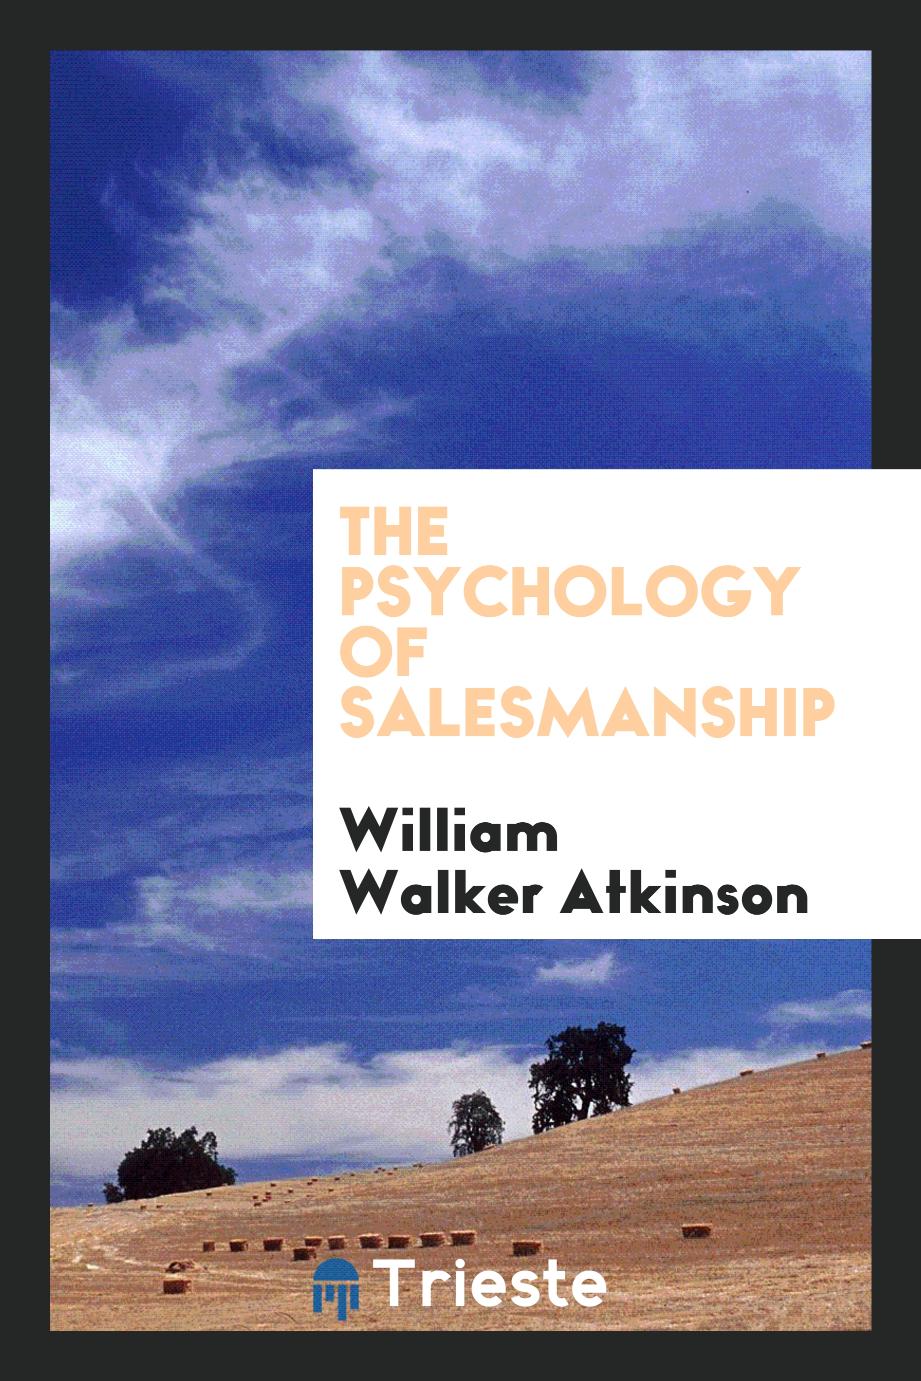 The psychology of salesmanship